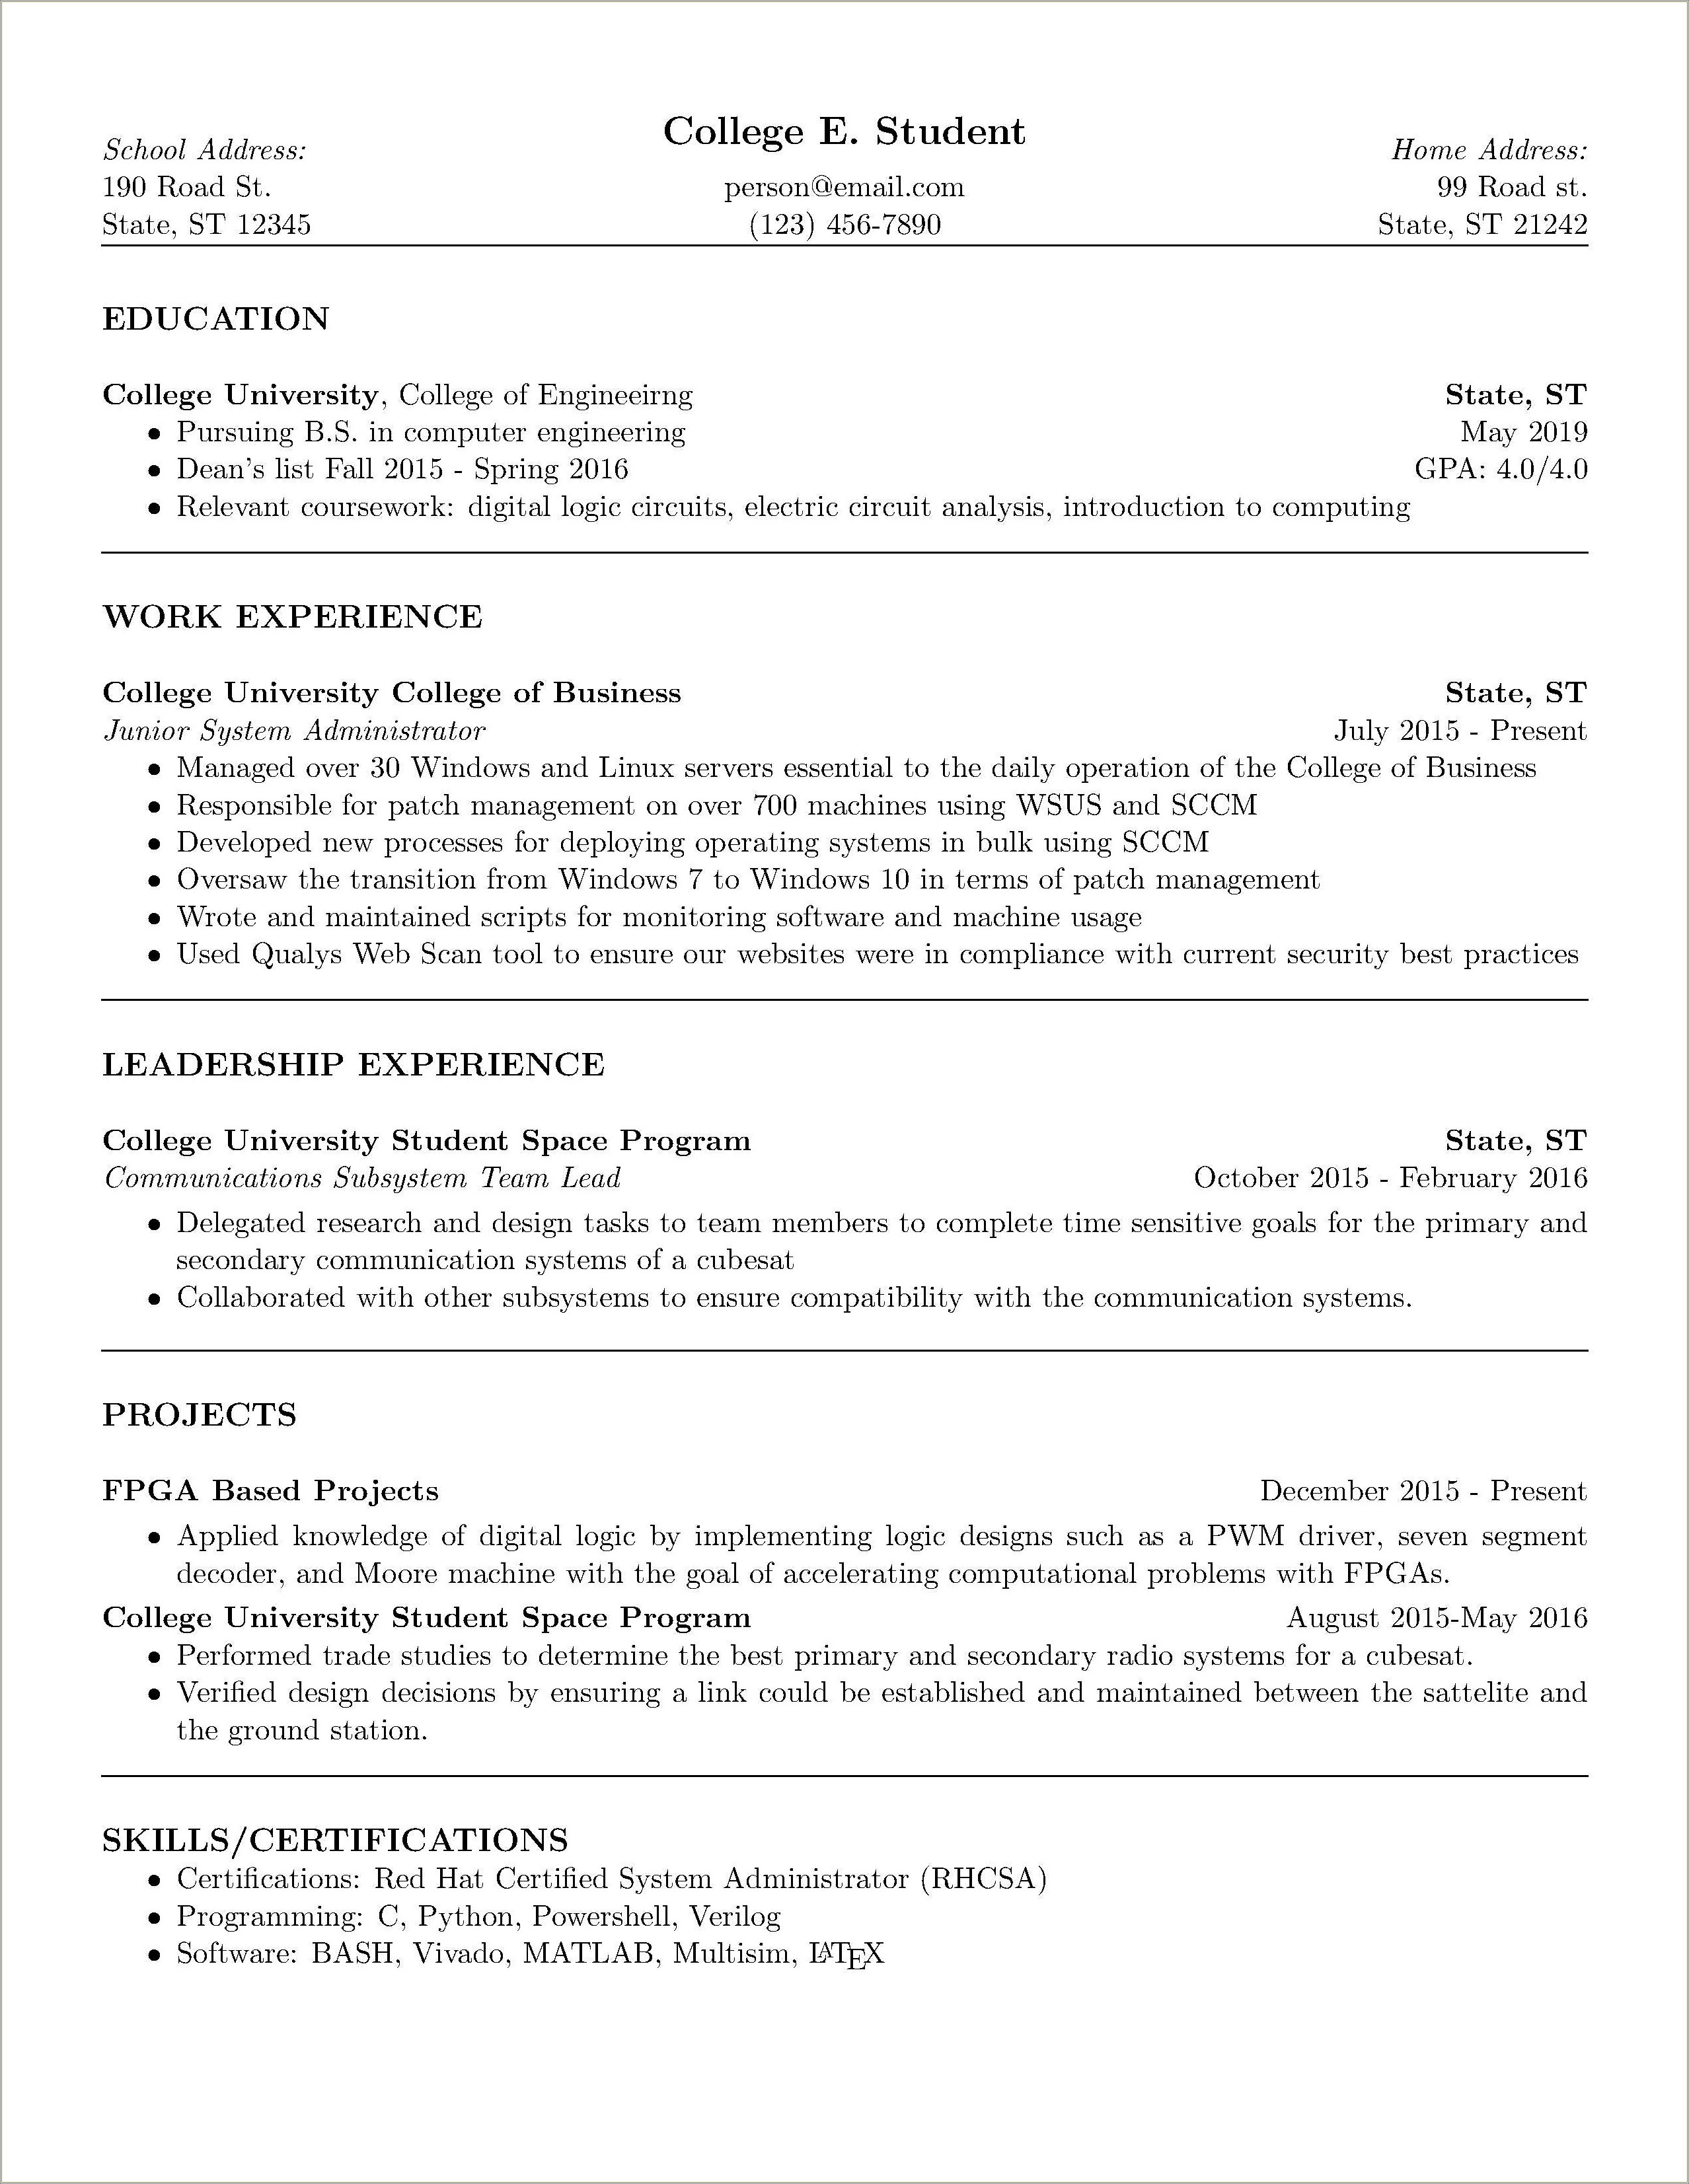 english-degree-major-resume-description-reddit-resume-example-gallery